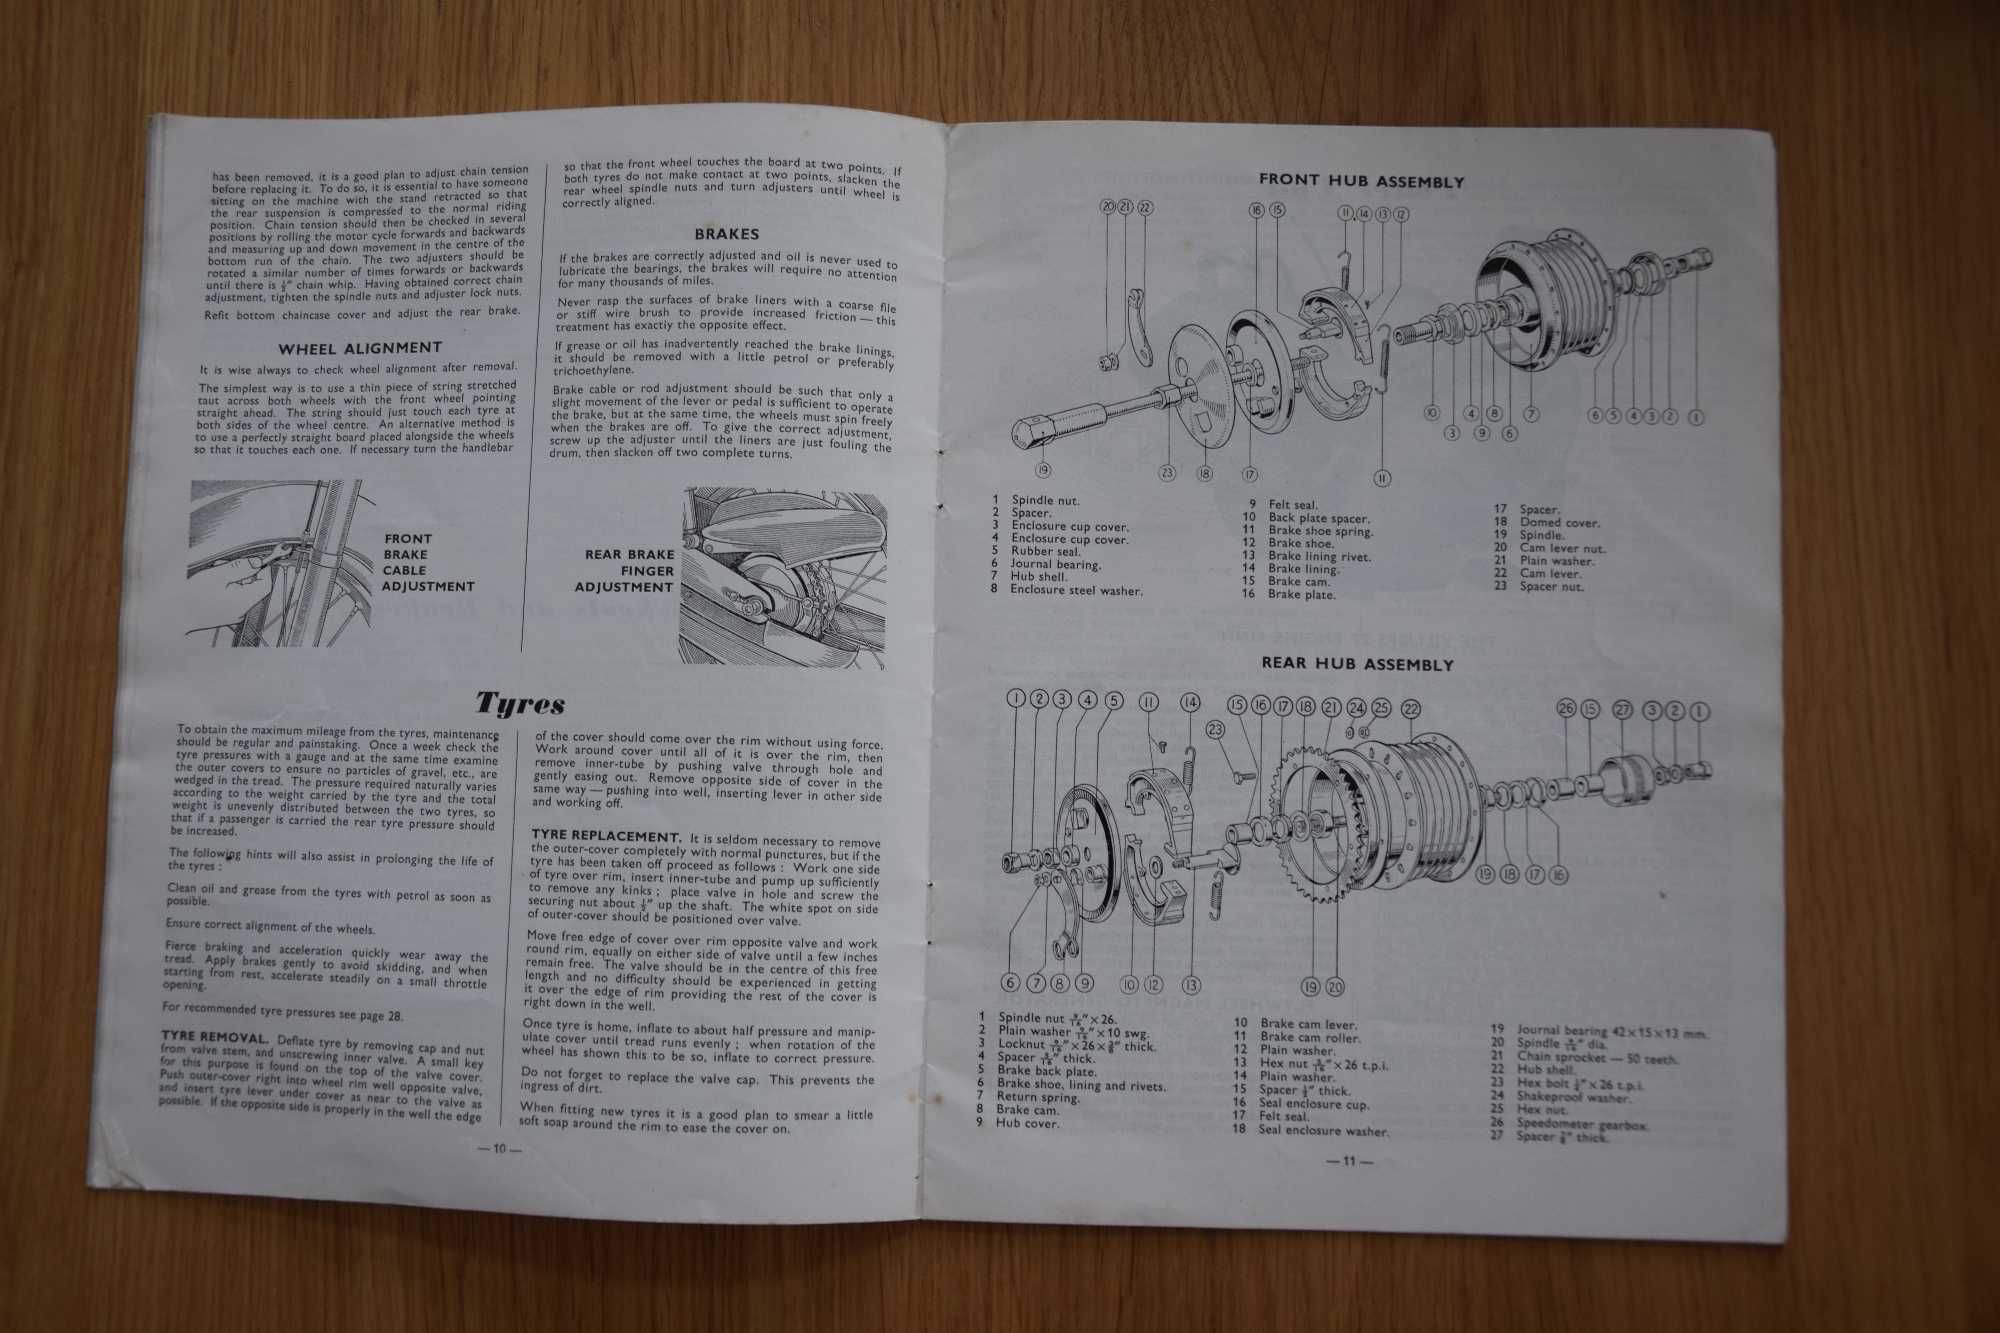 Instrukcja katalog JAMES bsa norton ajs royal enfield